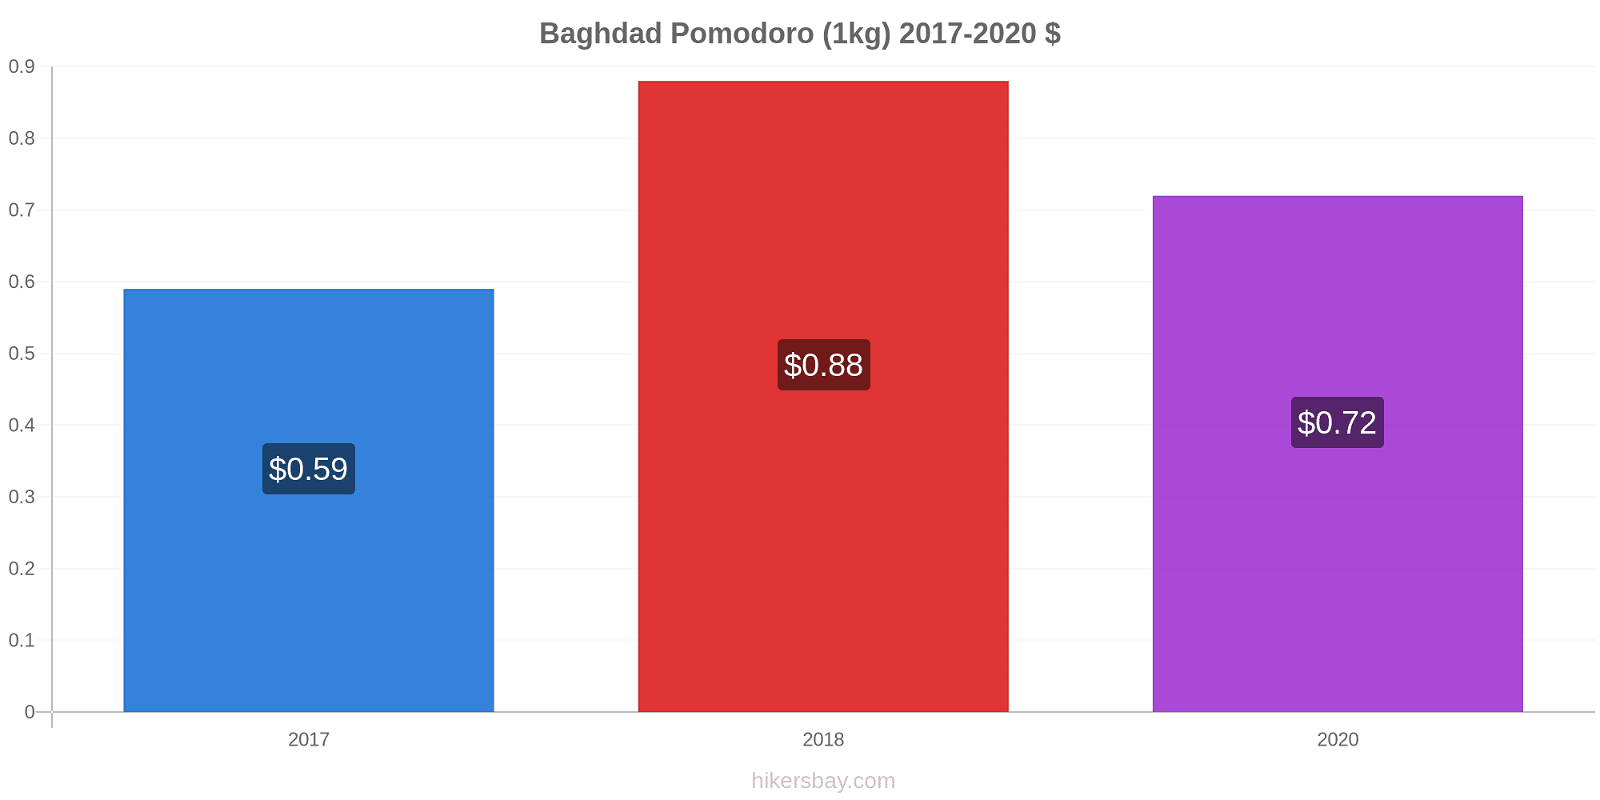 Baghdad variazioni di prezzo Pomodoro (1kg) hikersbay.com